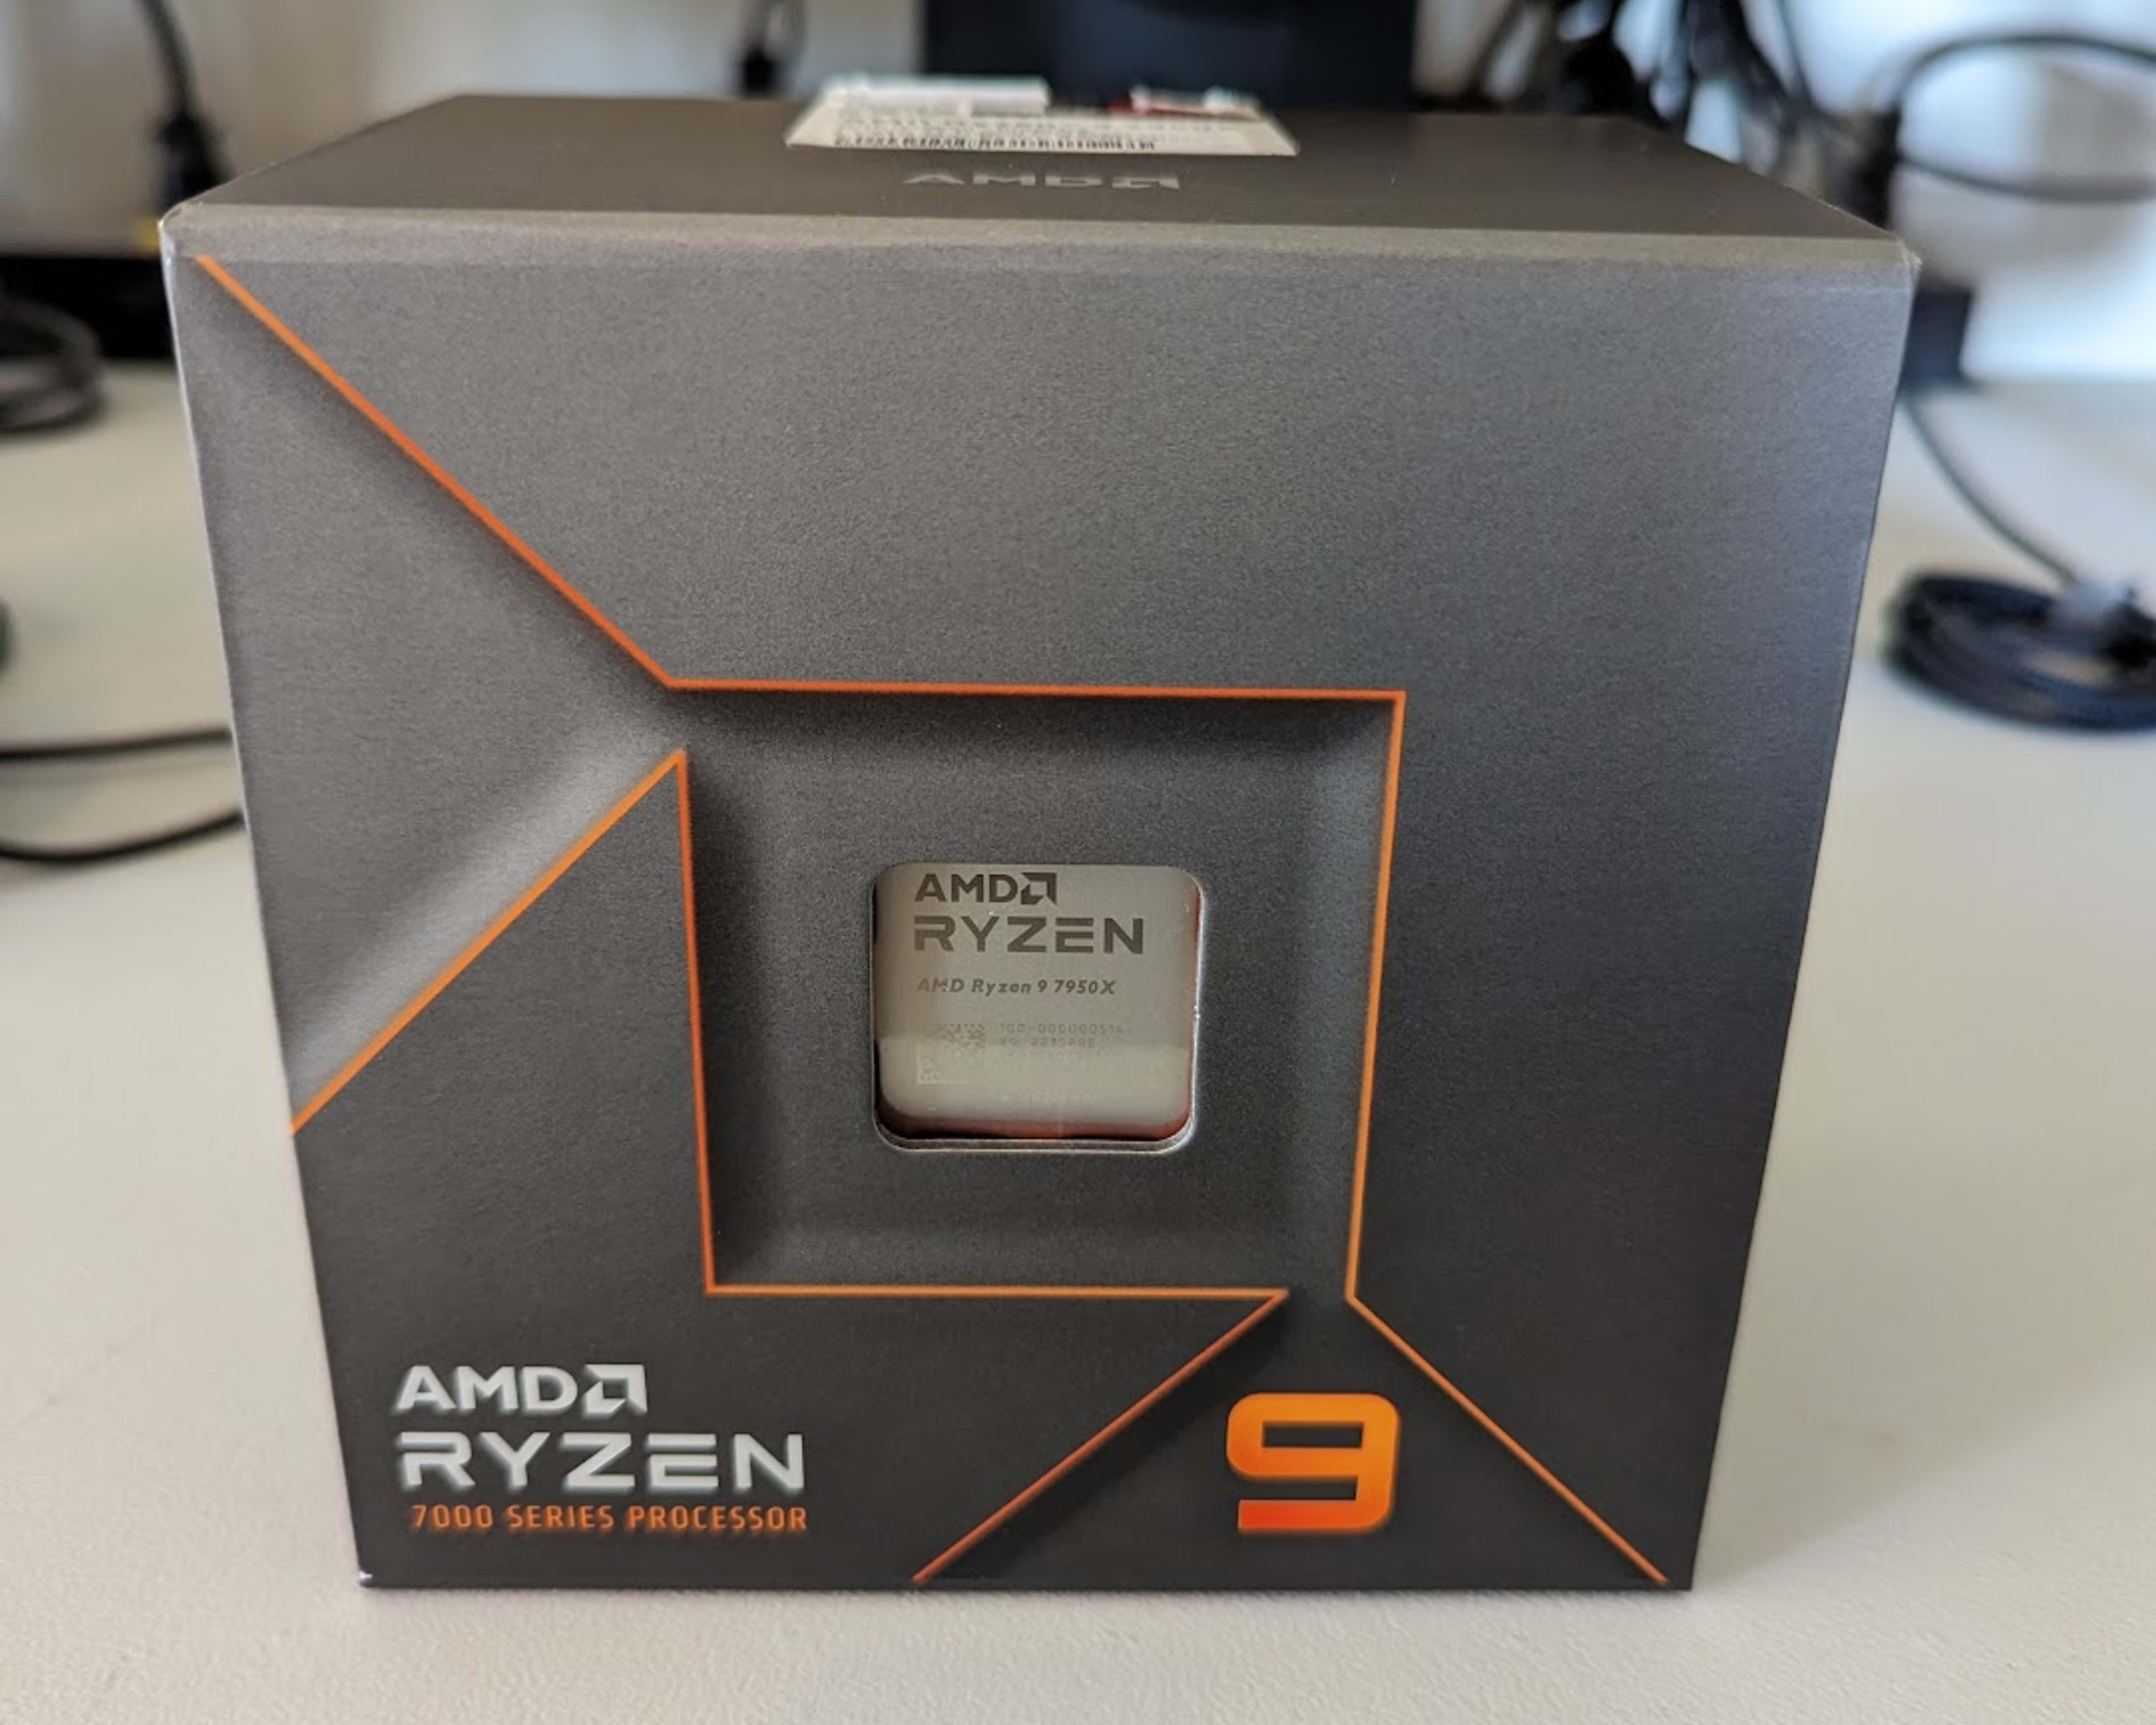 AMD Ryzen 9 7950X Desktop Processor/CPU - 16 Core/32 Thread